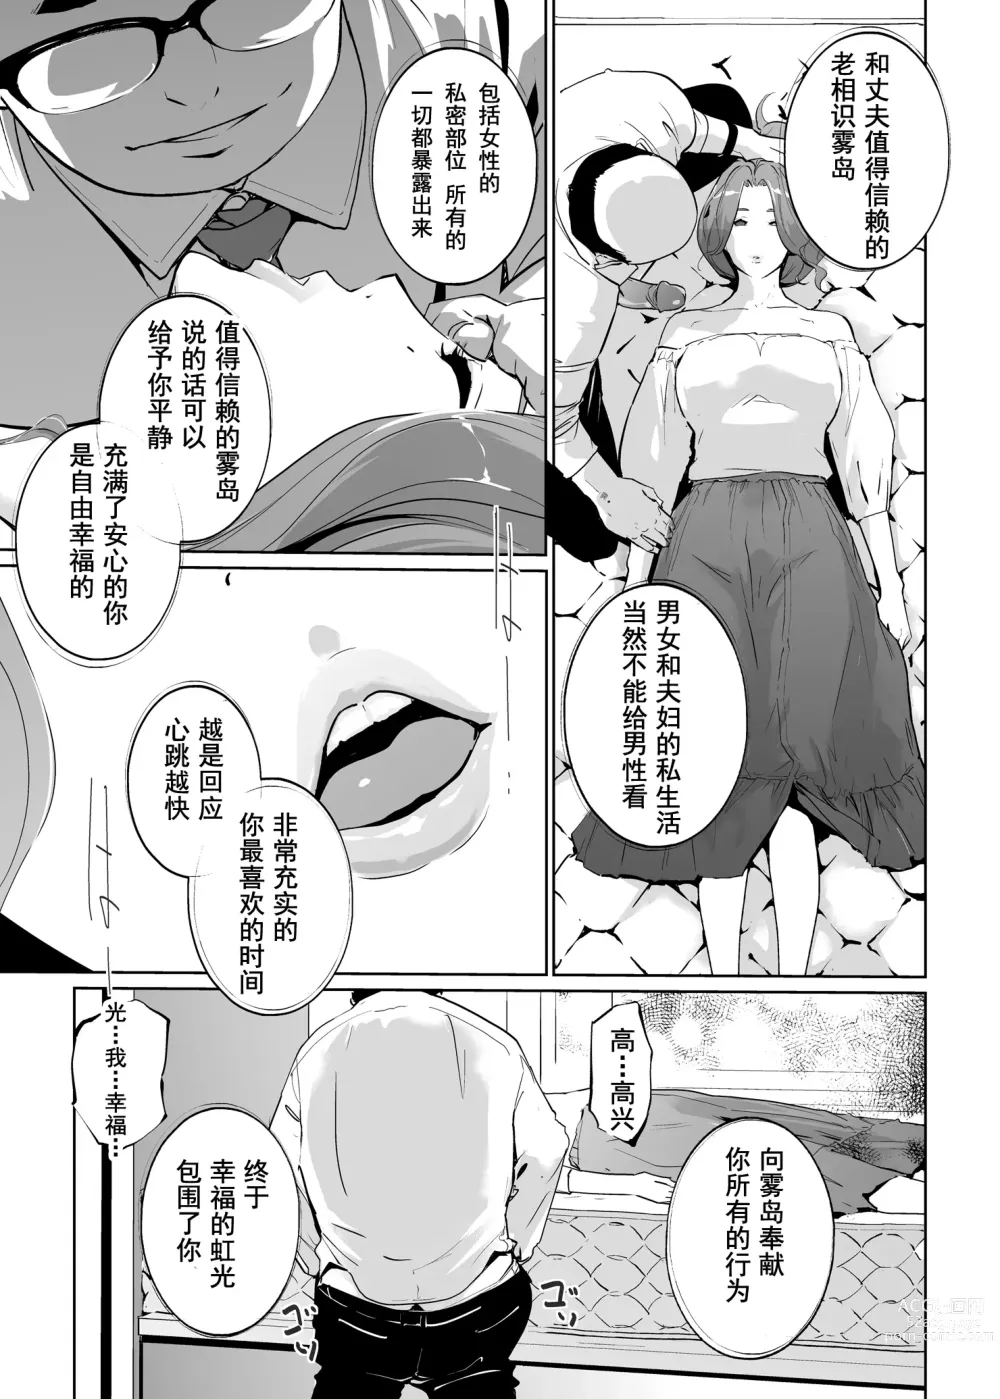 Page 15 of doujinshi NTR Nemuri Hime vol. 1